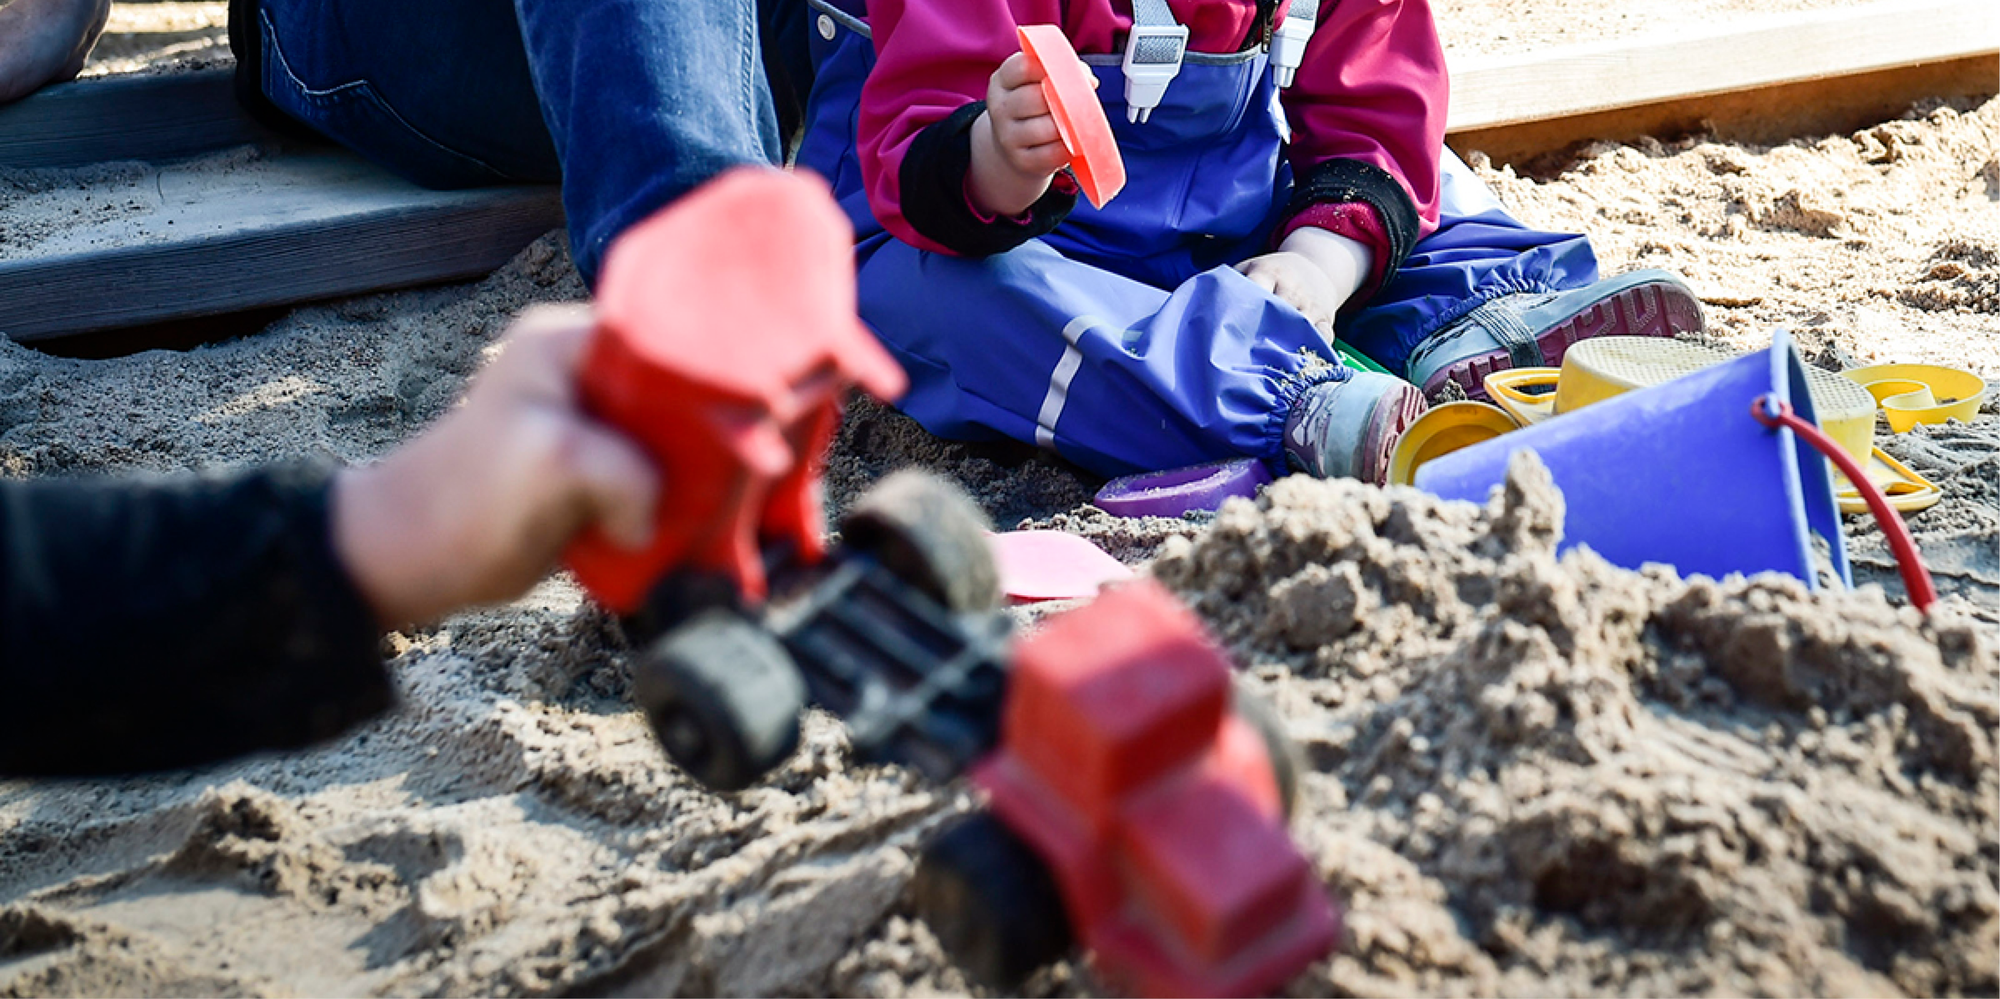 Barnhänder som leker med plastleksaker i en sandlåda. 